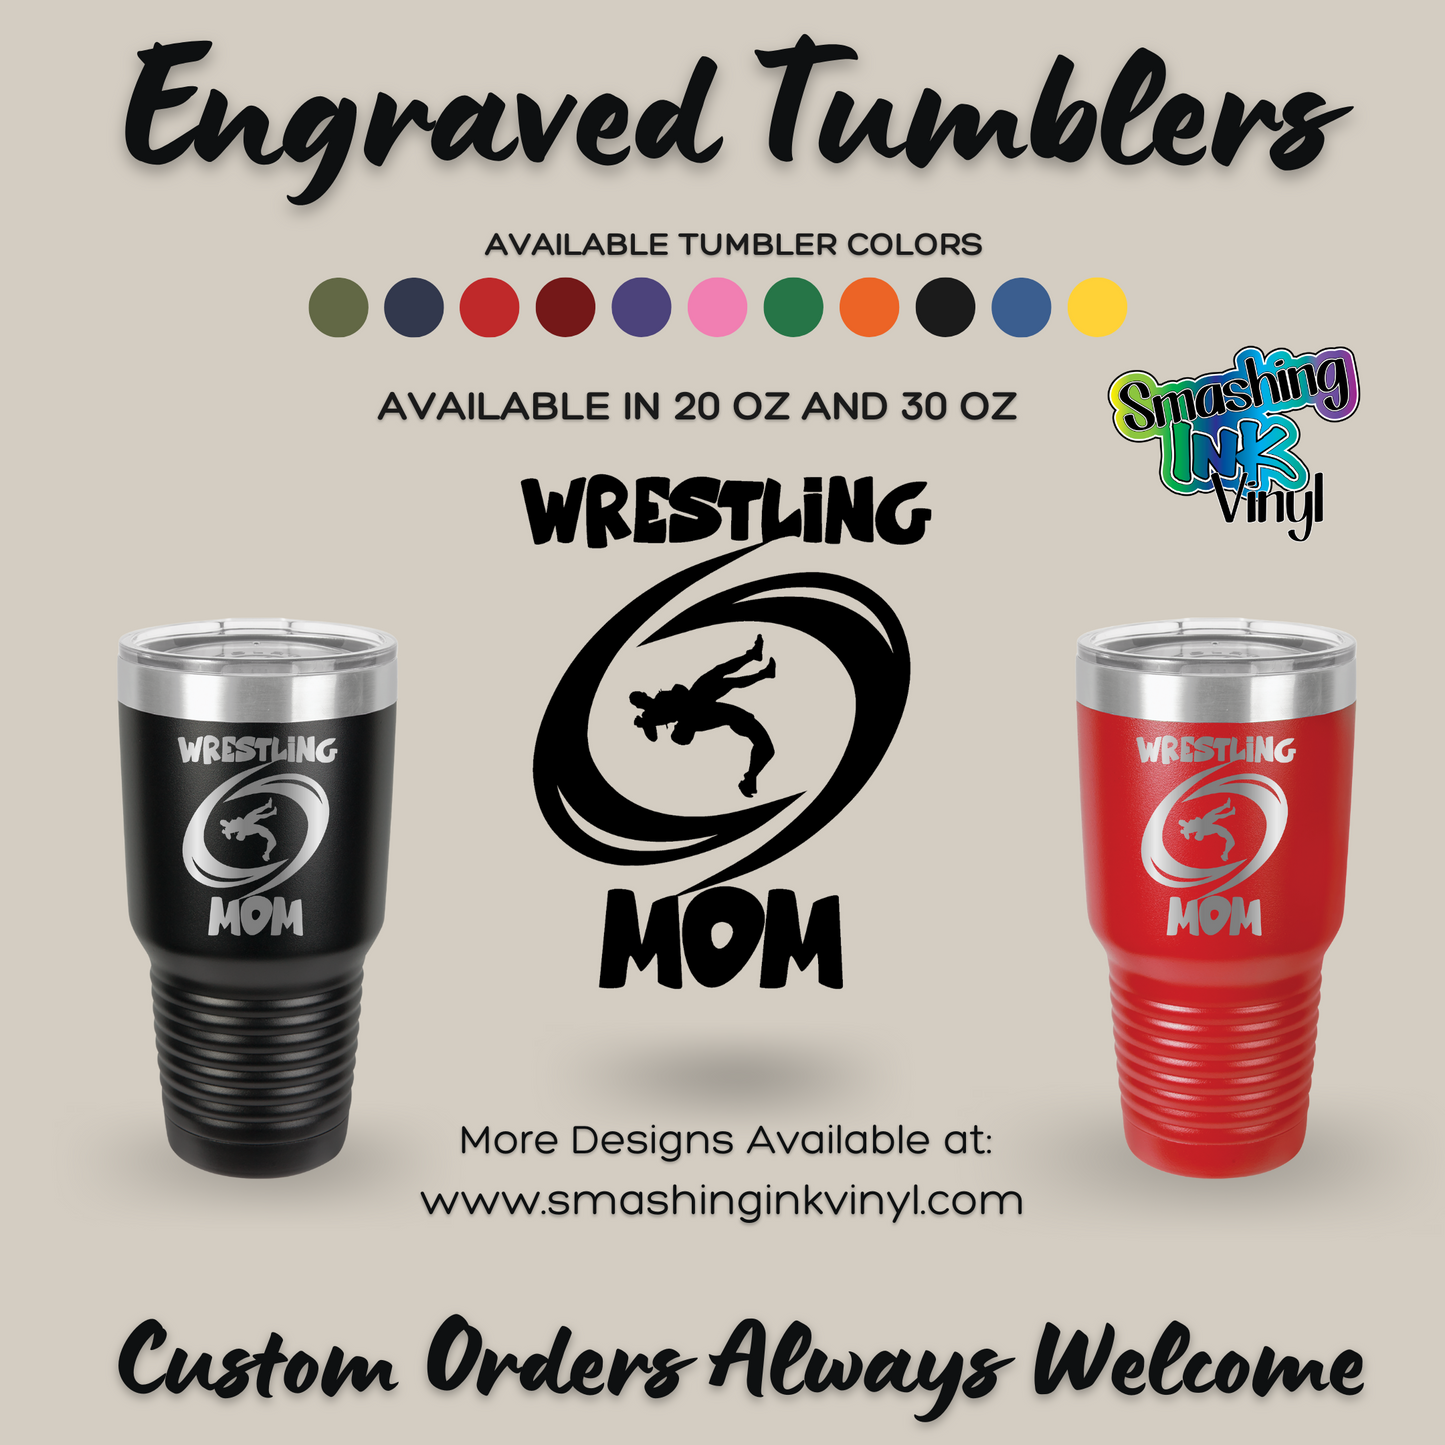 Wrestling Mom - Engraved Tumblers (TAT 3-5 BUS DAYS)